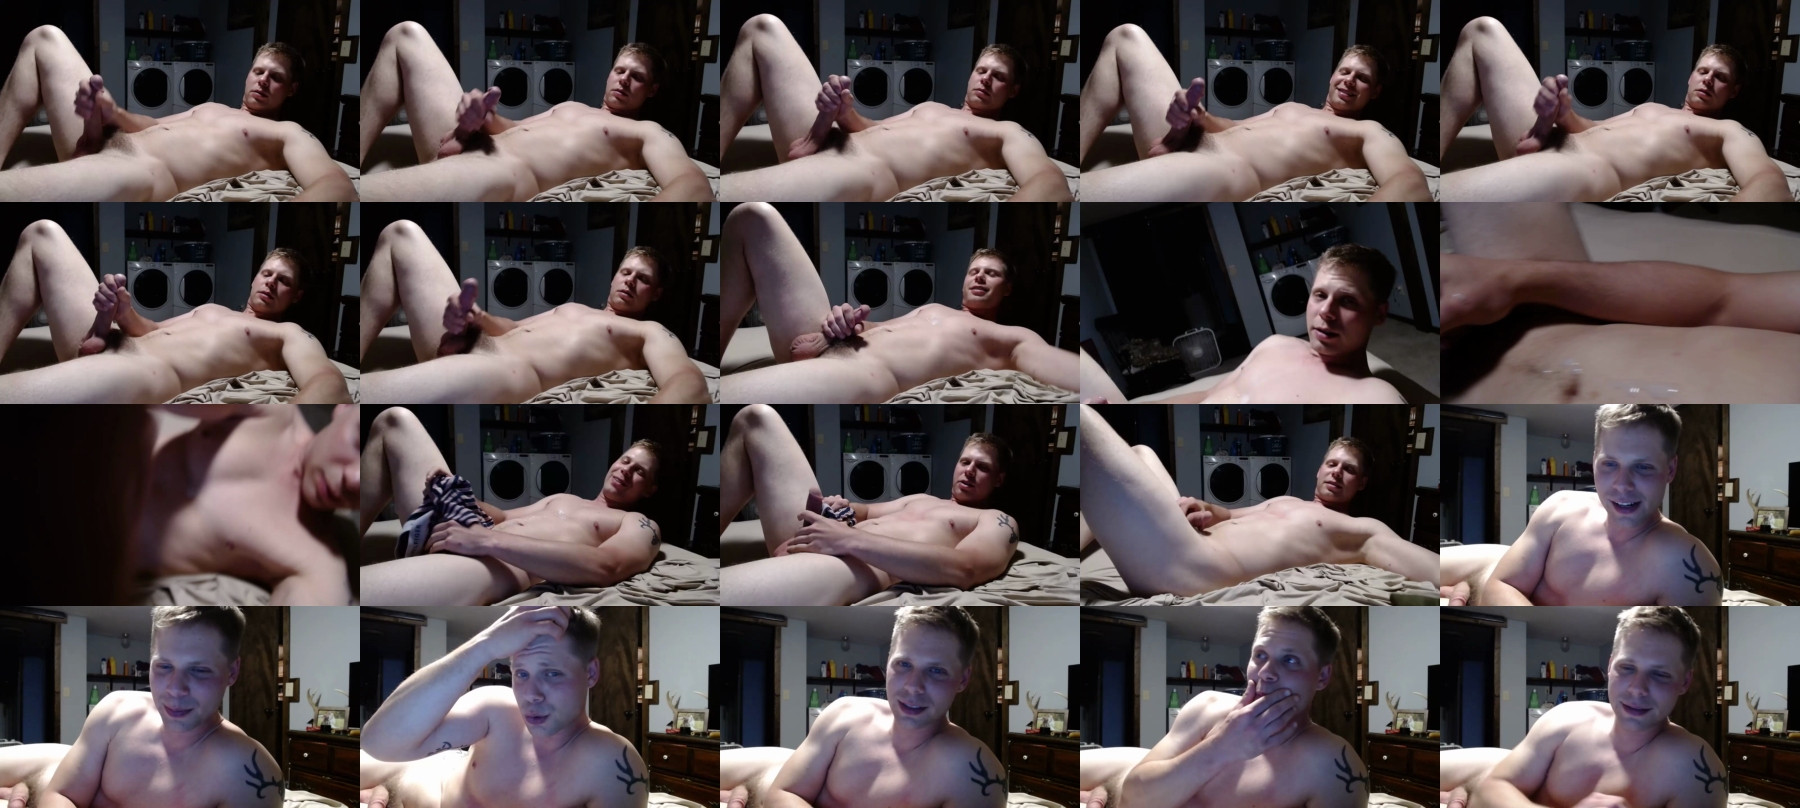 Lancehardin  03-05-2021 Male Nude